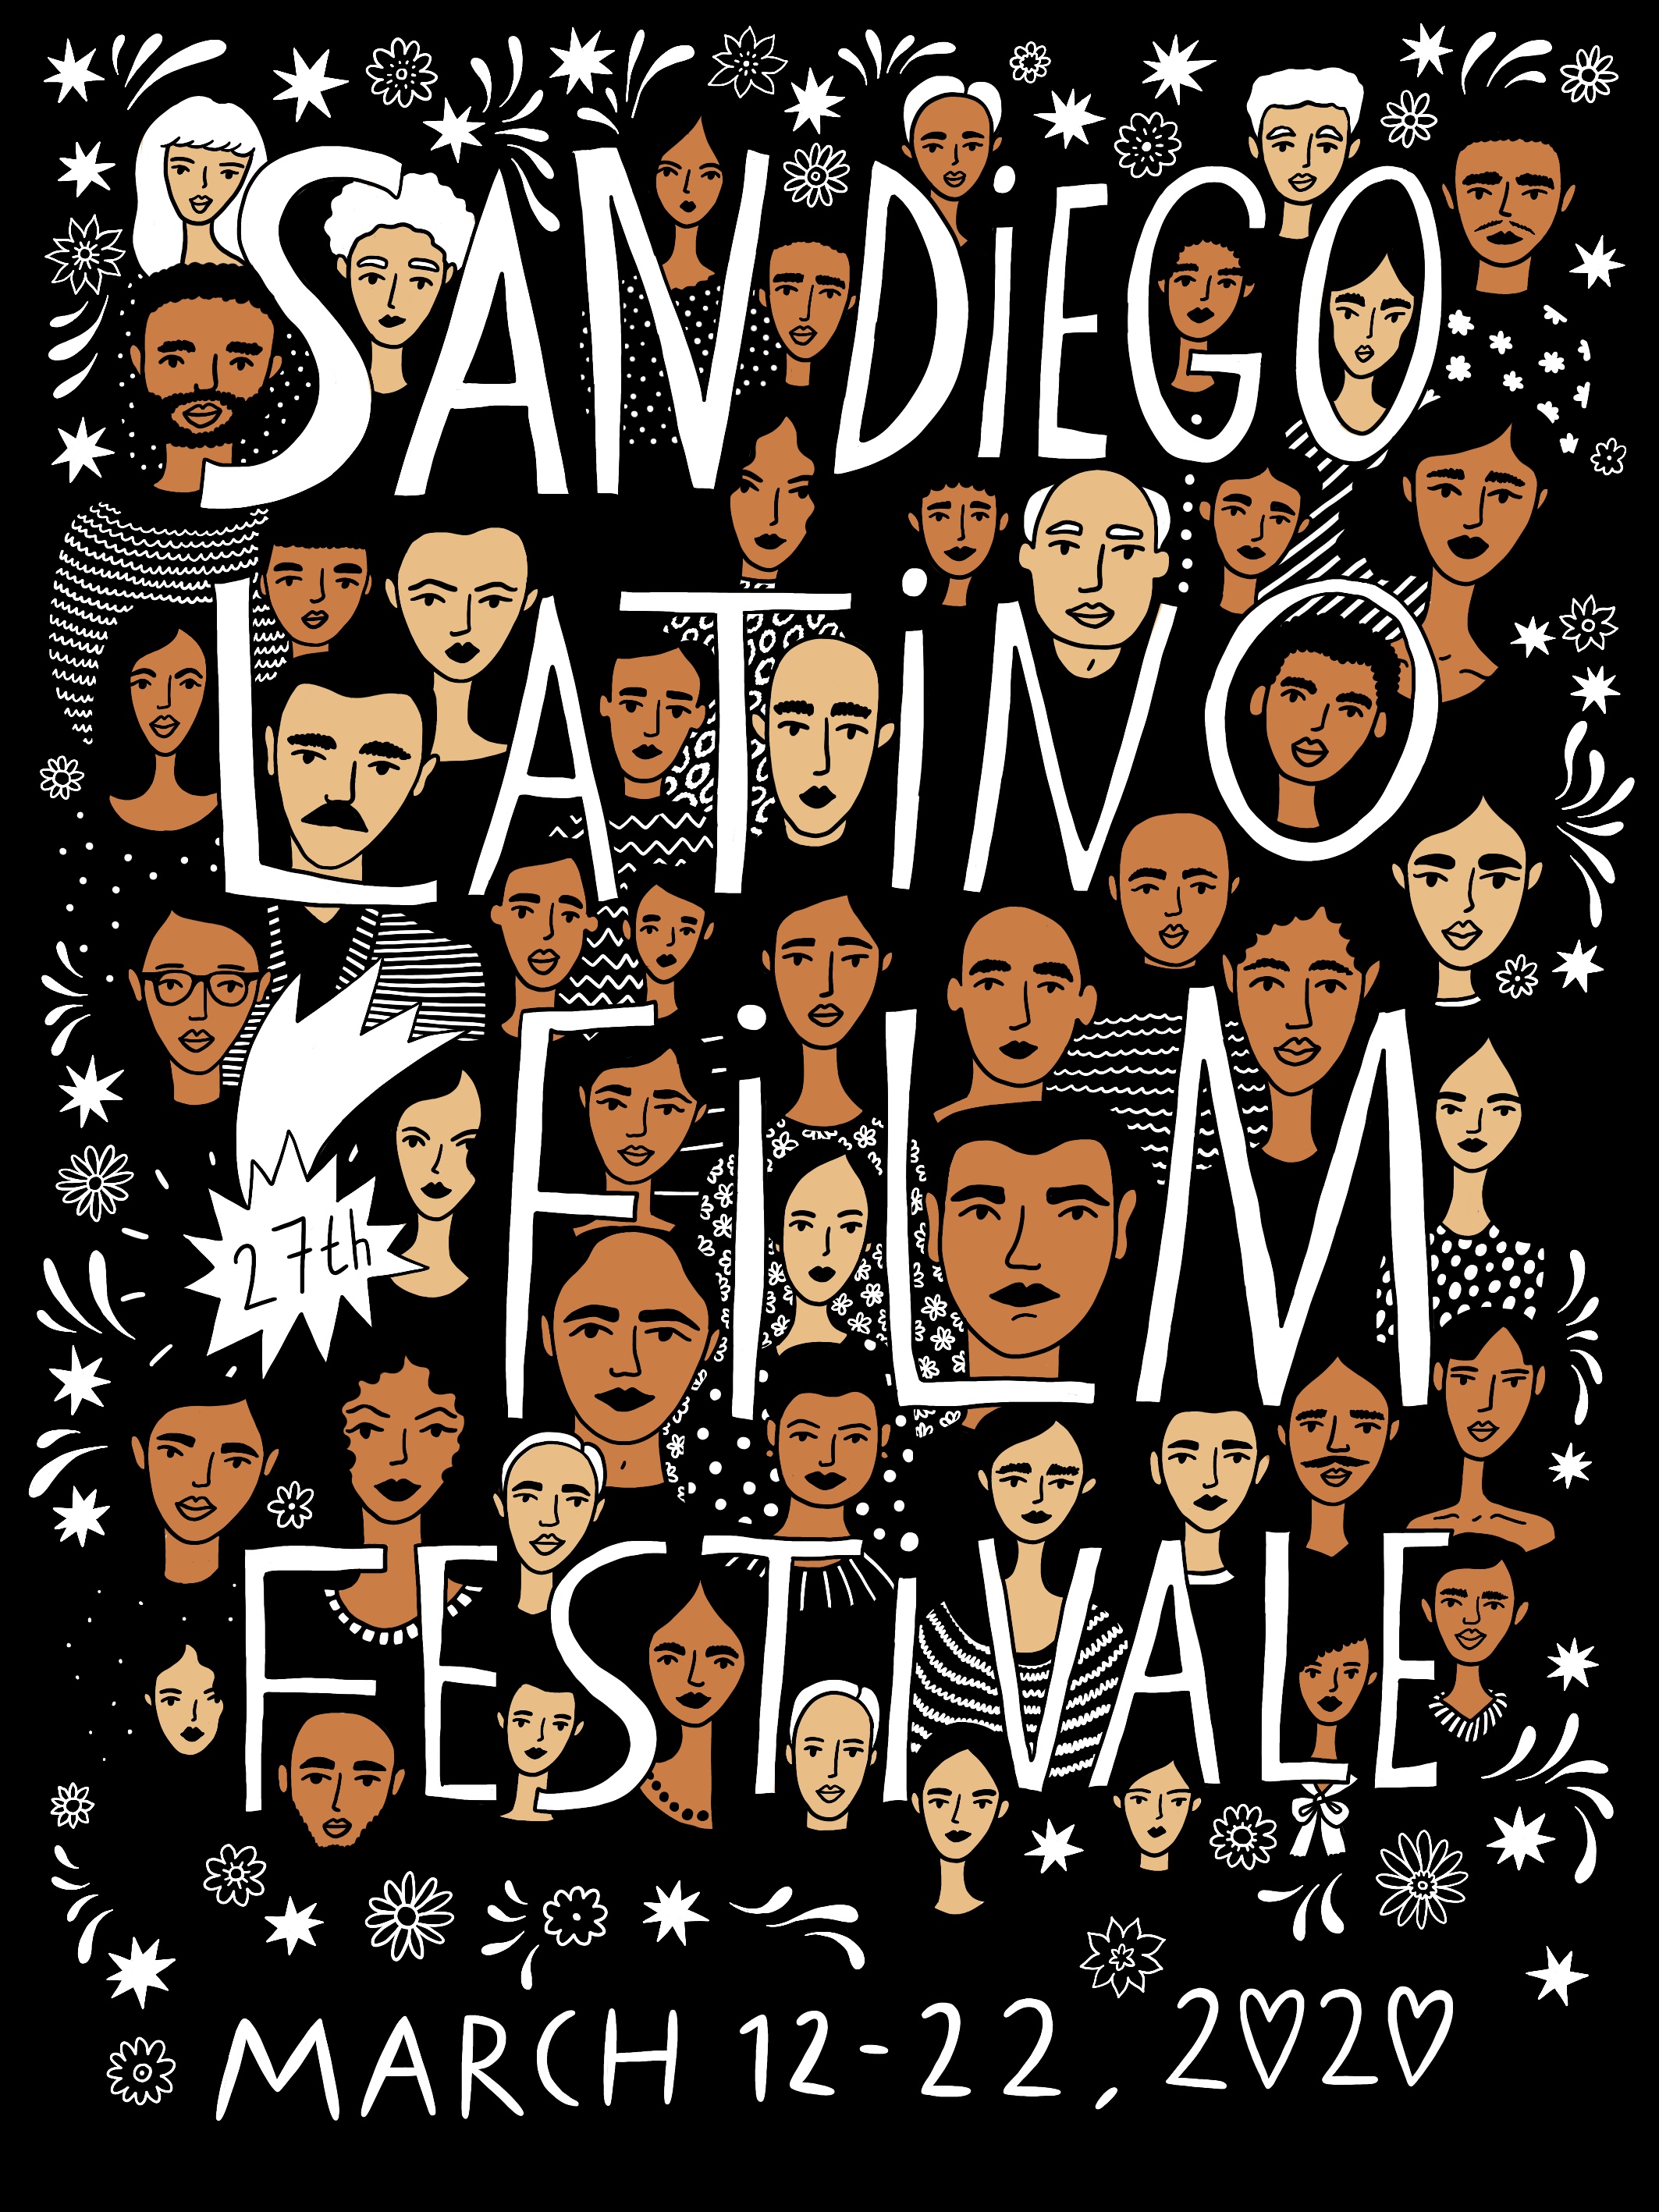 Иллюстрация San Diego Latino Film Festival 2020 в стиле плакат